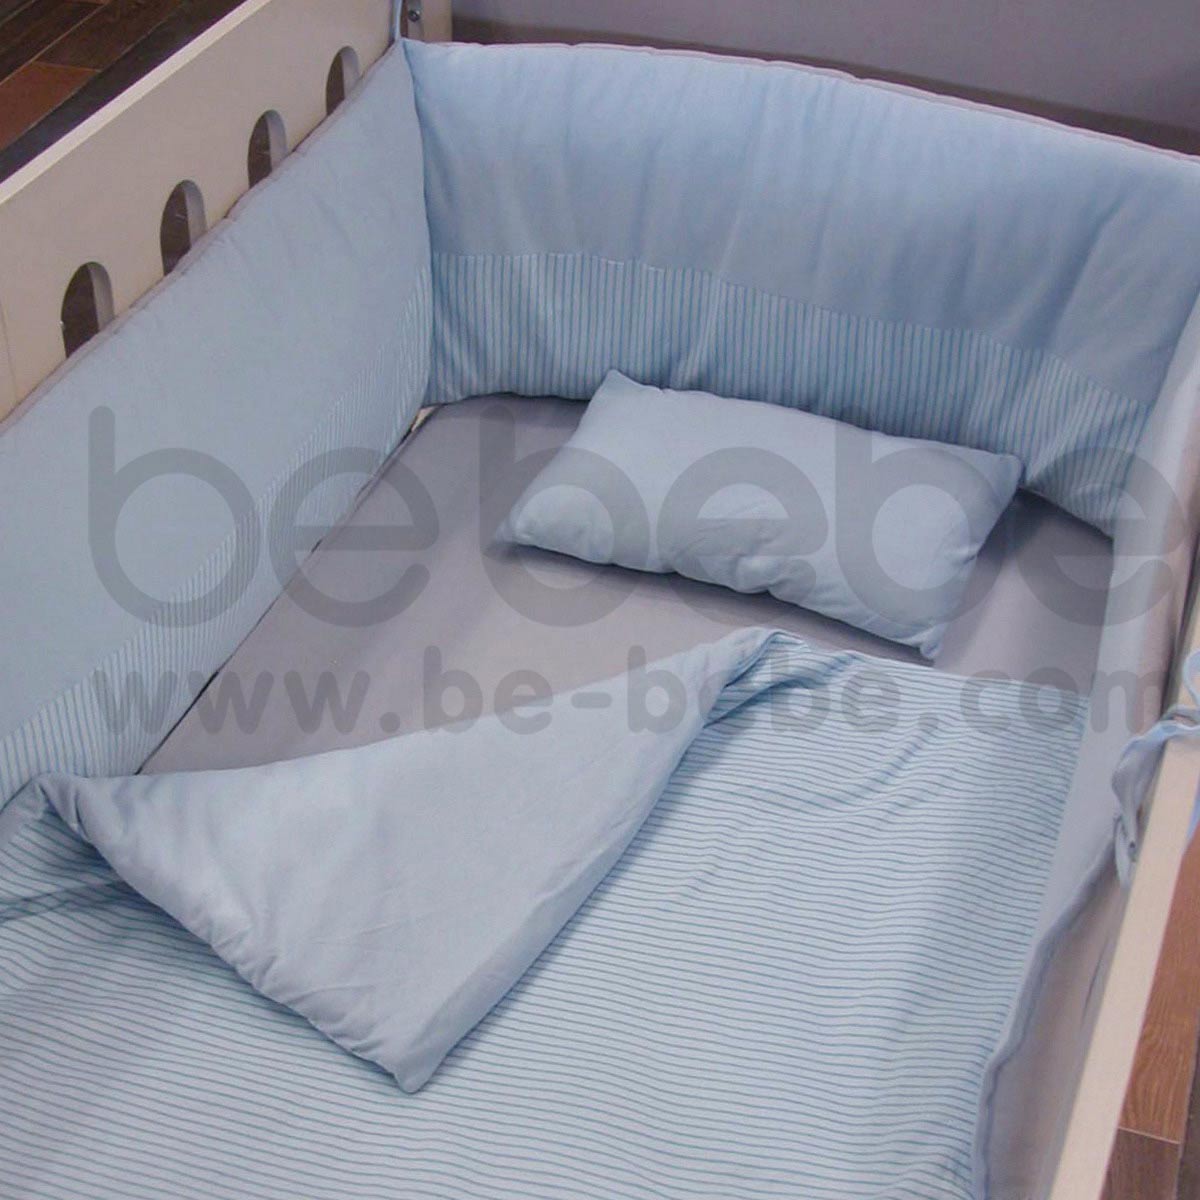 be bebe:Bedding Set 70x140/180(5 Pcs.)/Blue